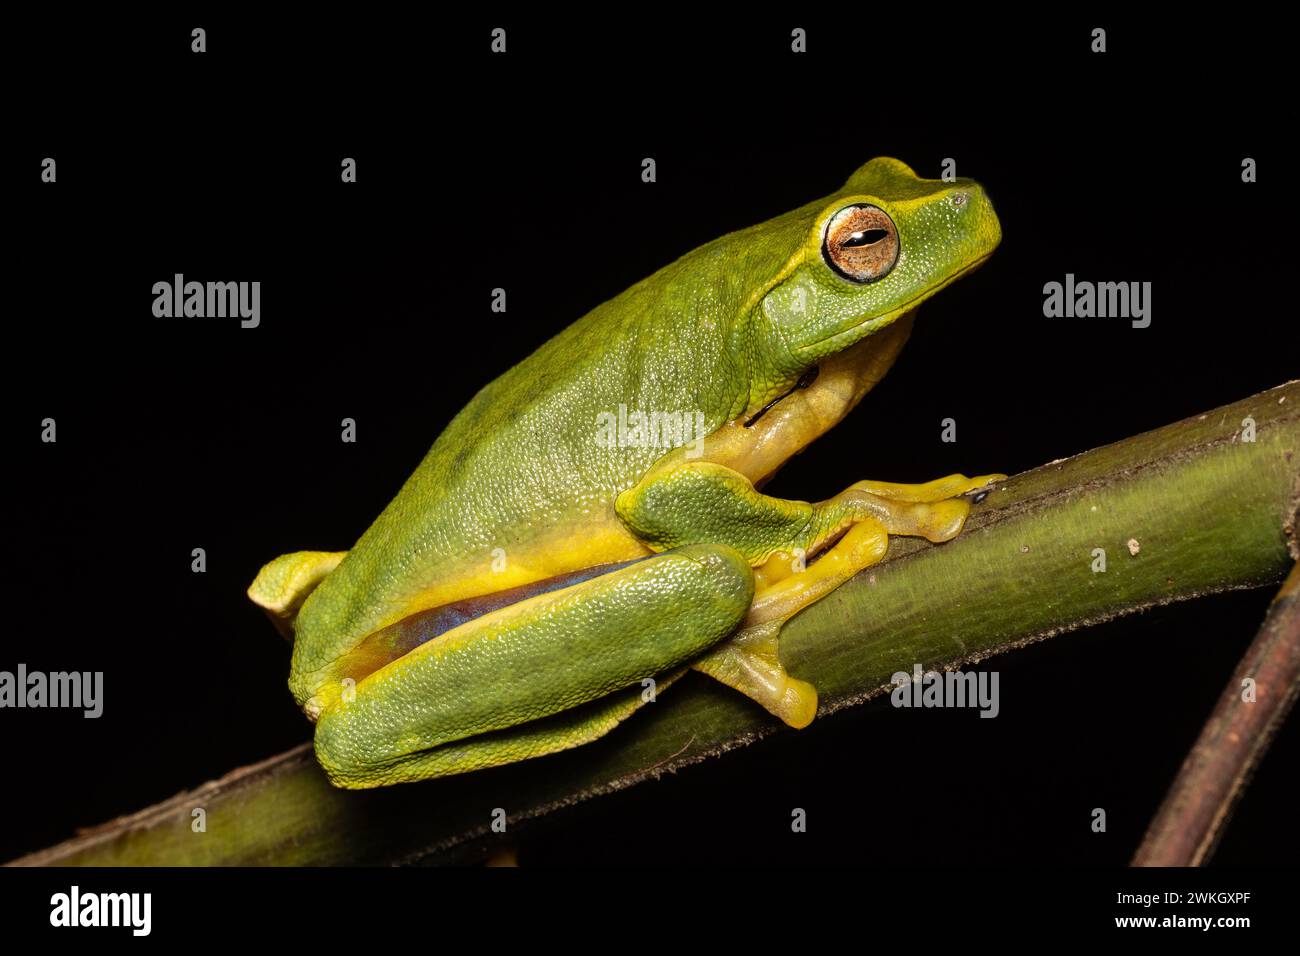 Australian Dainty Tree Frog resting on tree branch Stock Photo